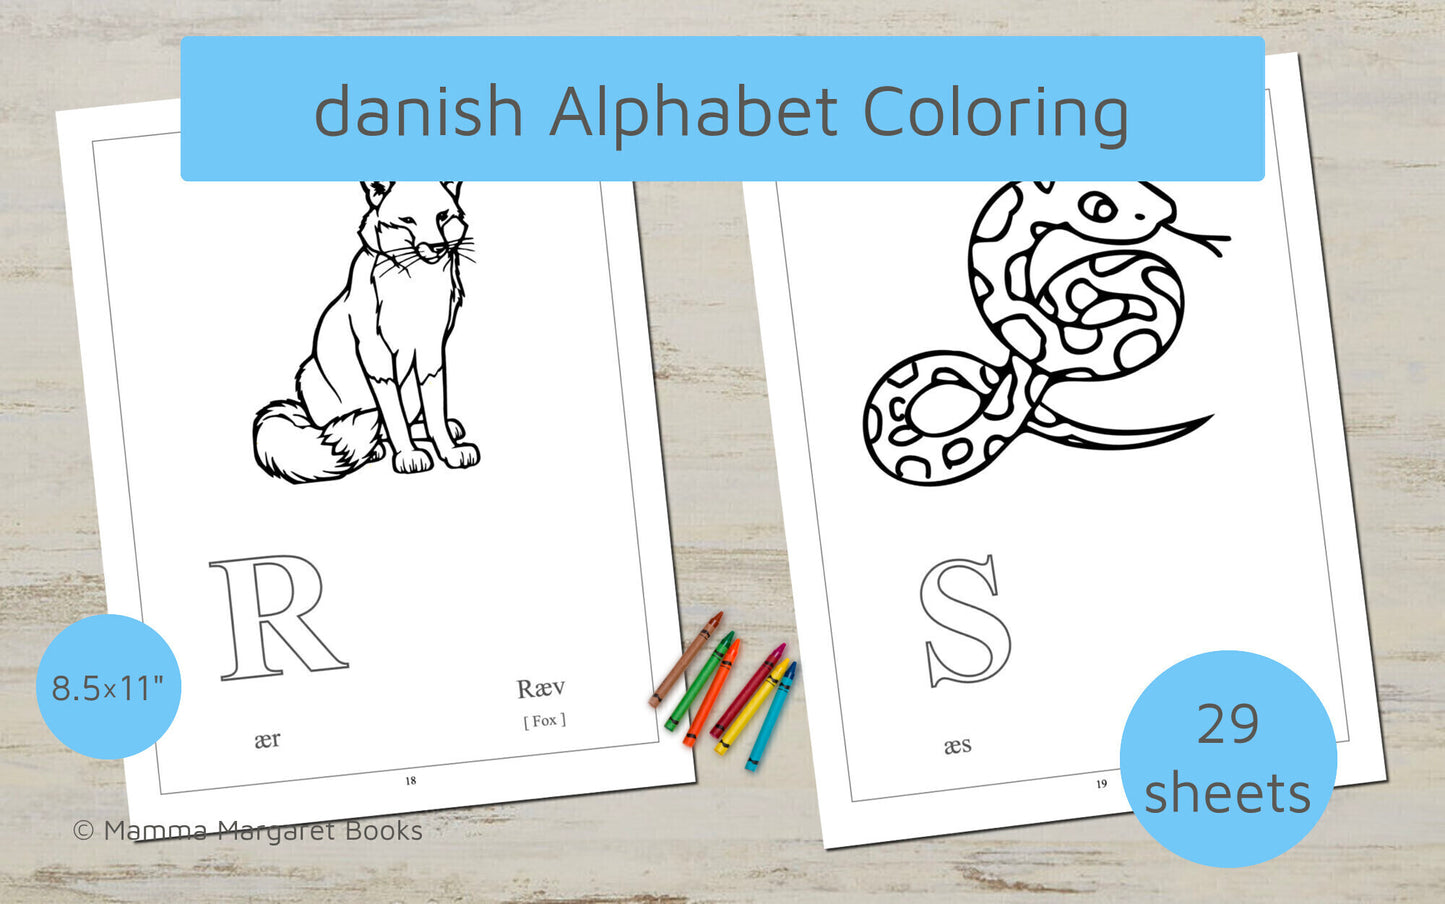 Danish Alphabet Coloring Pages (29 pages), Printable Danish Alphabet worksheet